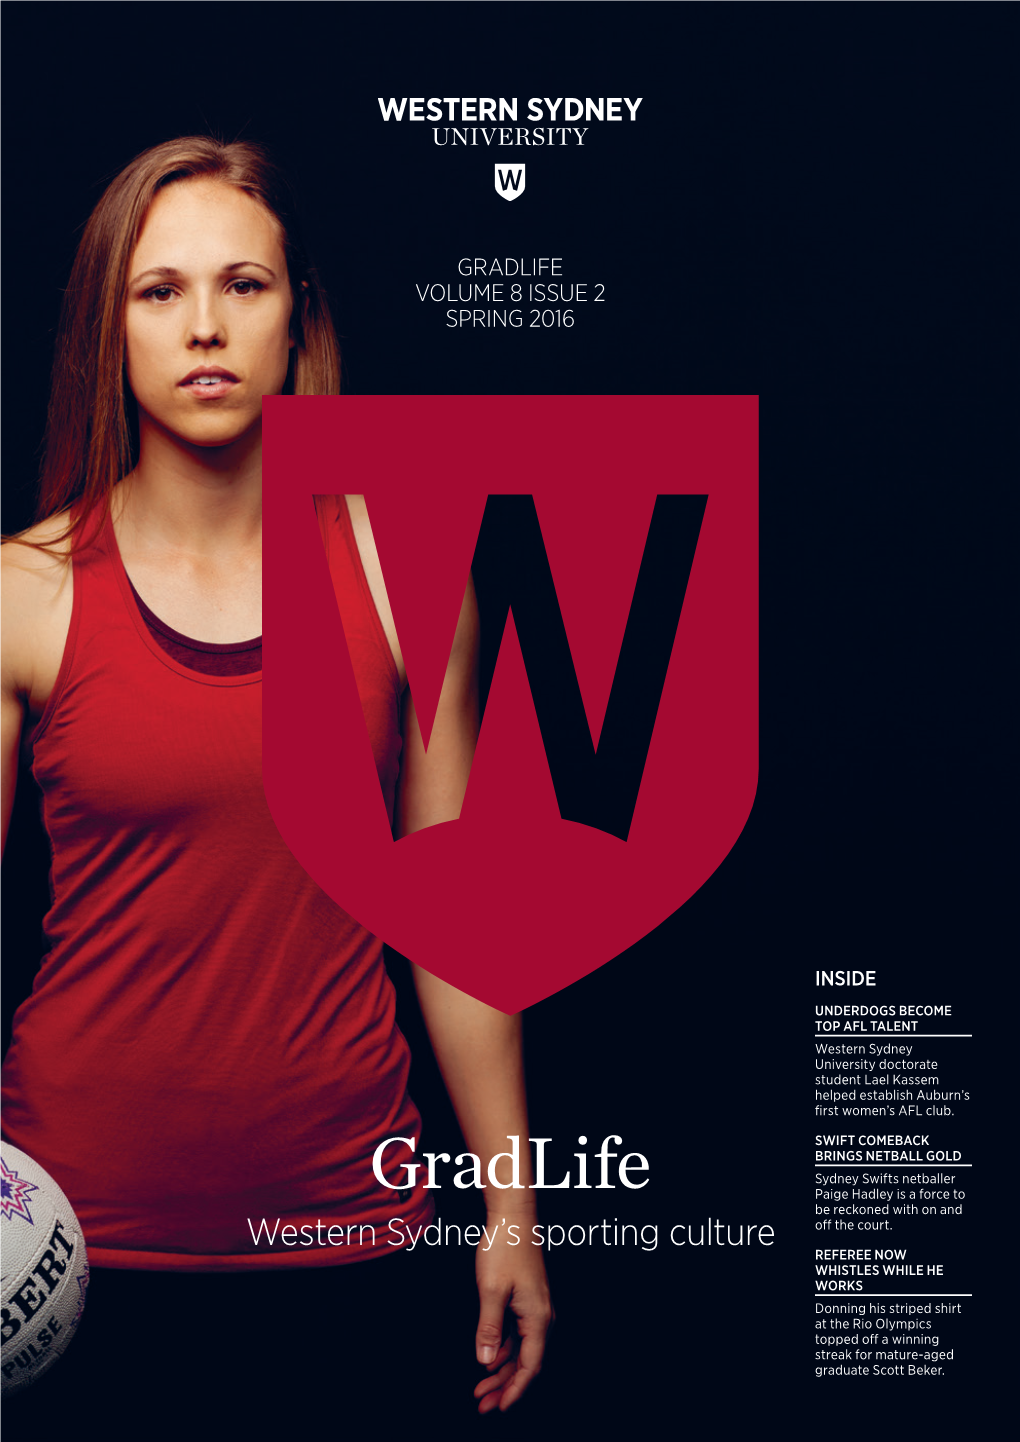 Gradlife Volume 8 Issue 2 Spring 2016